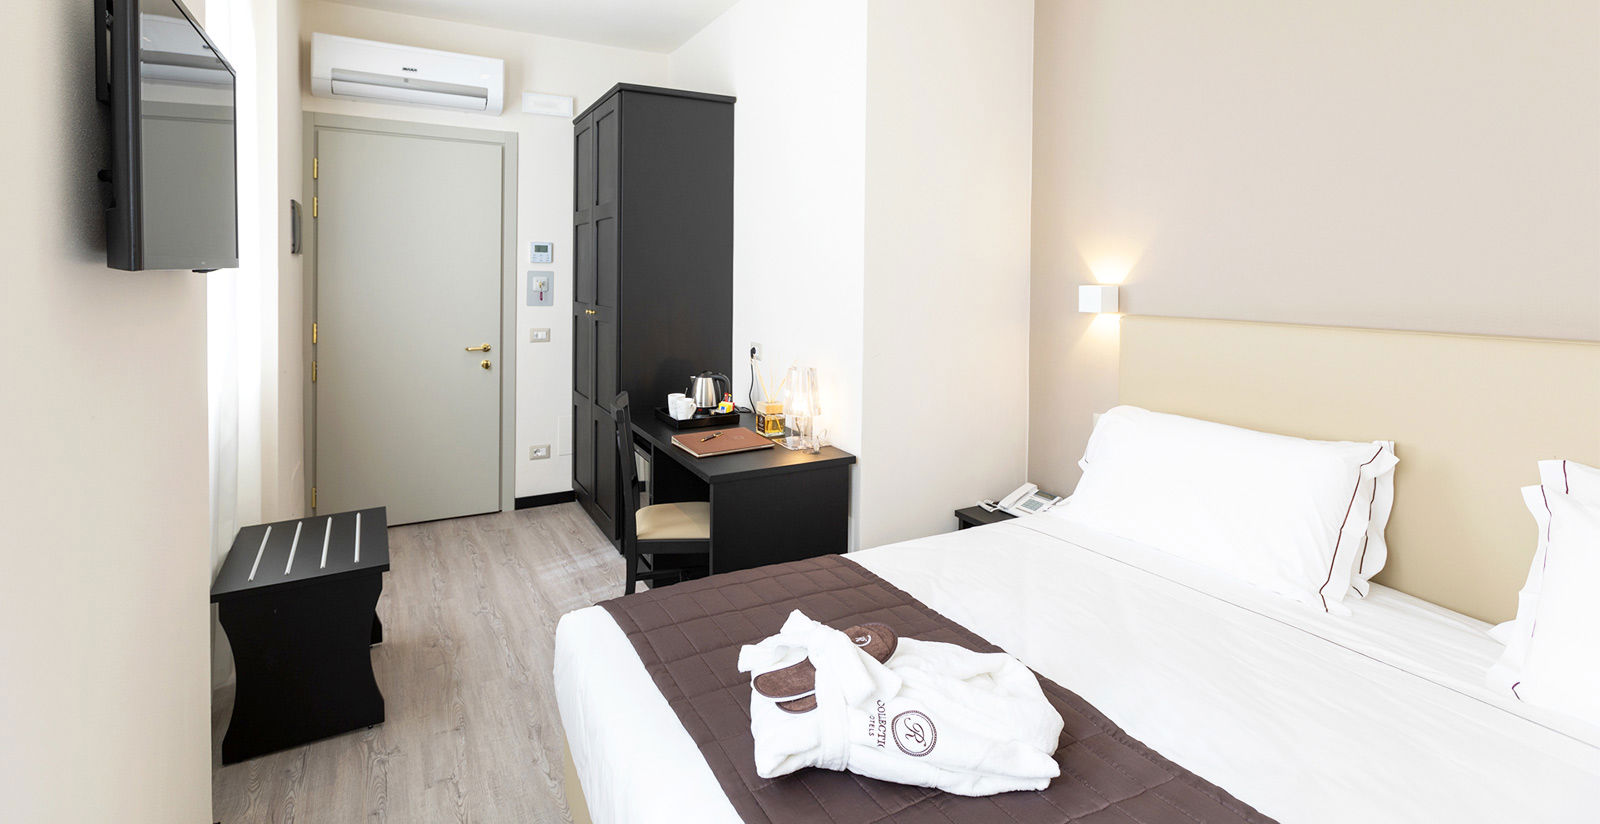 Hotel Villa Cipressi - Rooms 8